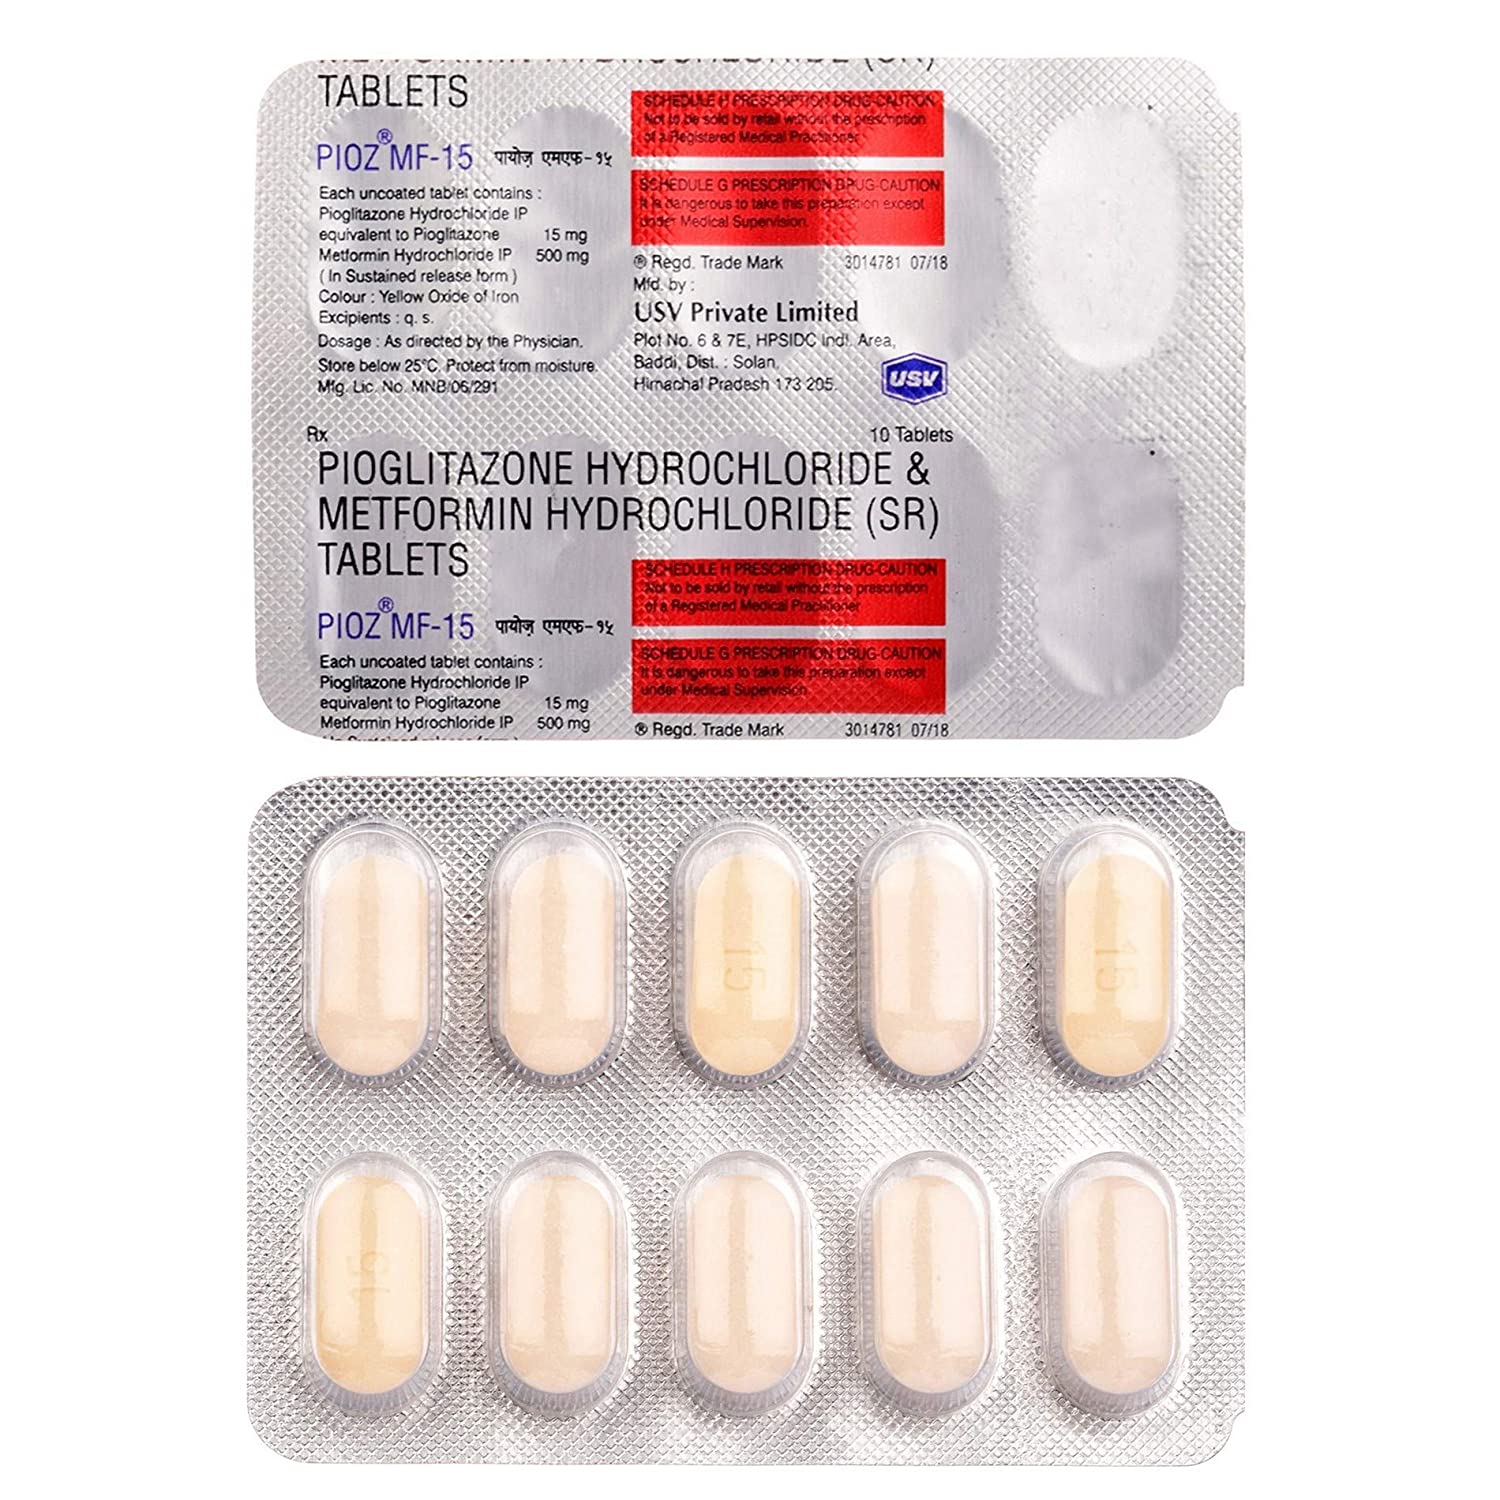 Positrarx Your Local Online Pharmacy Pioz Mf 15 Mg Tablet